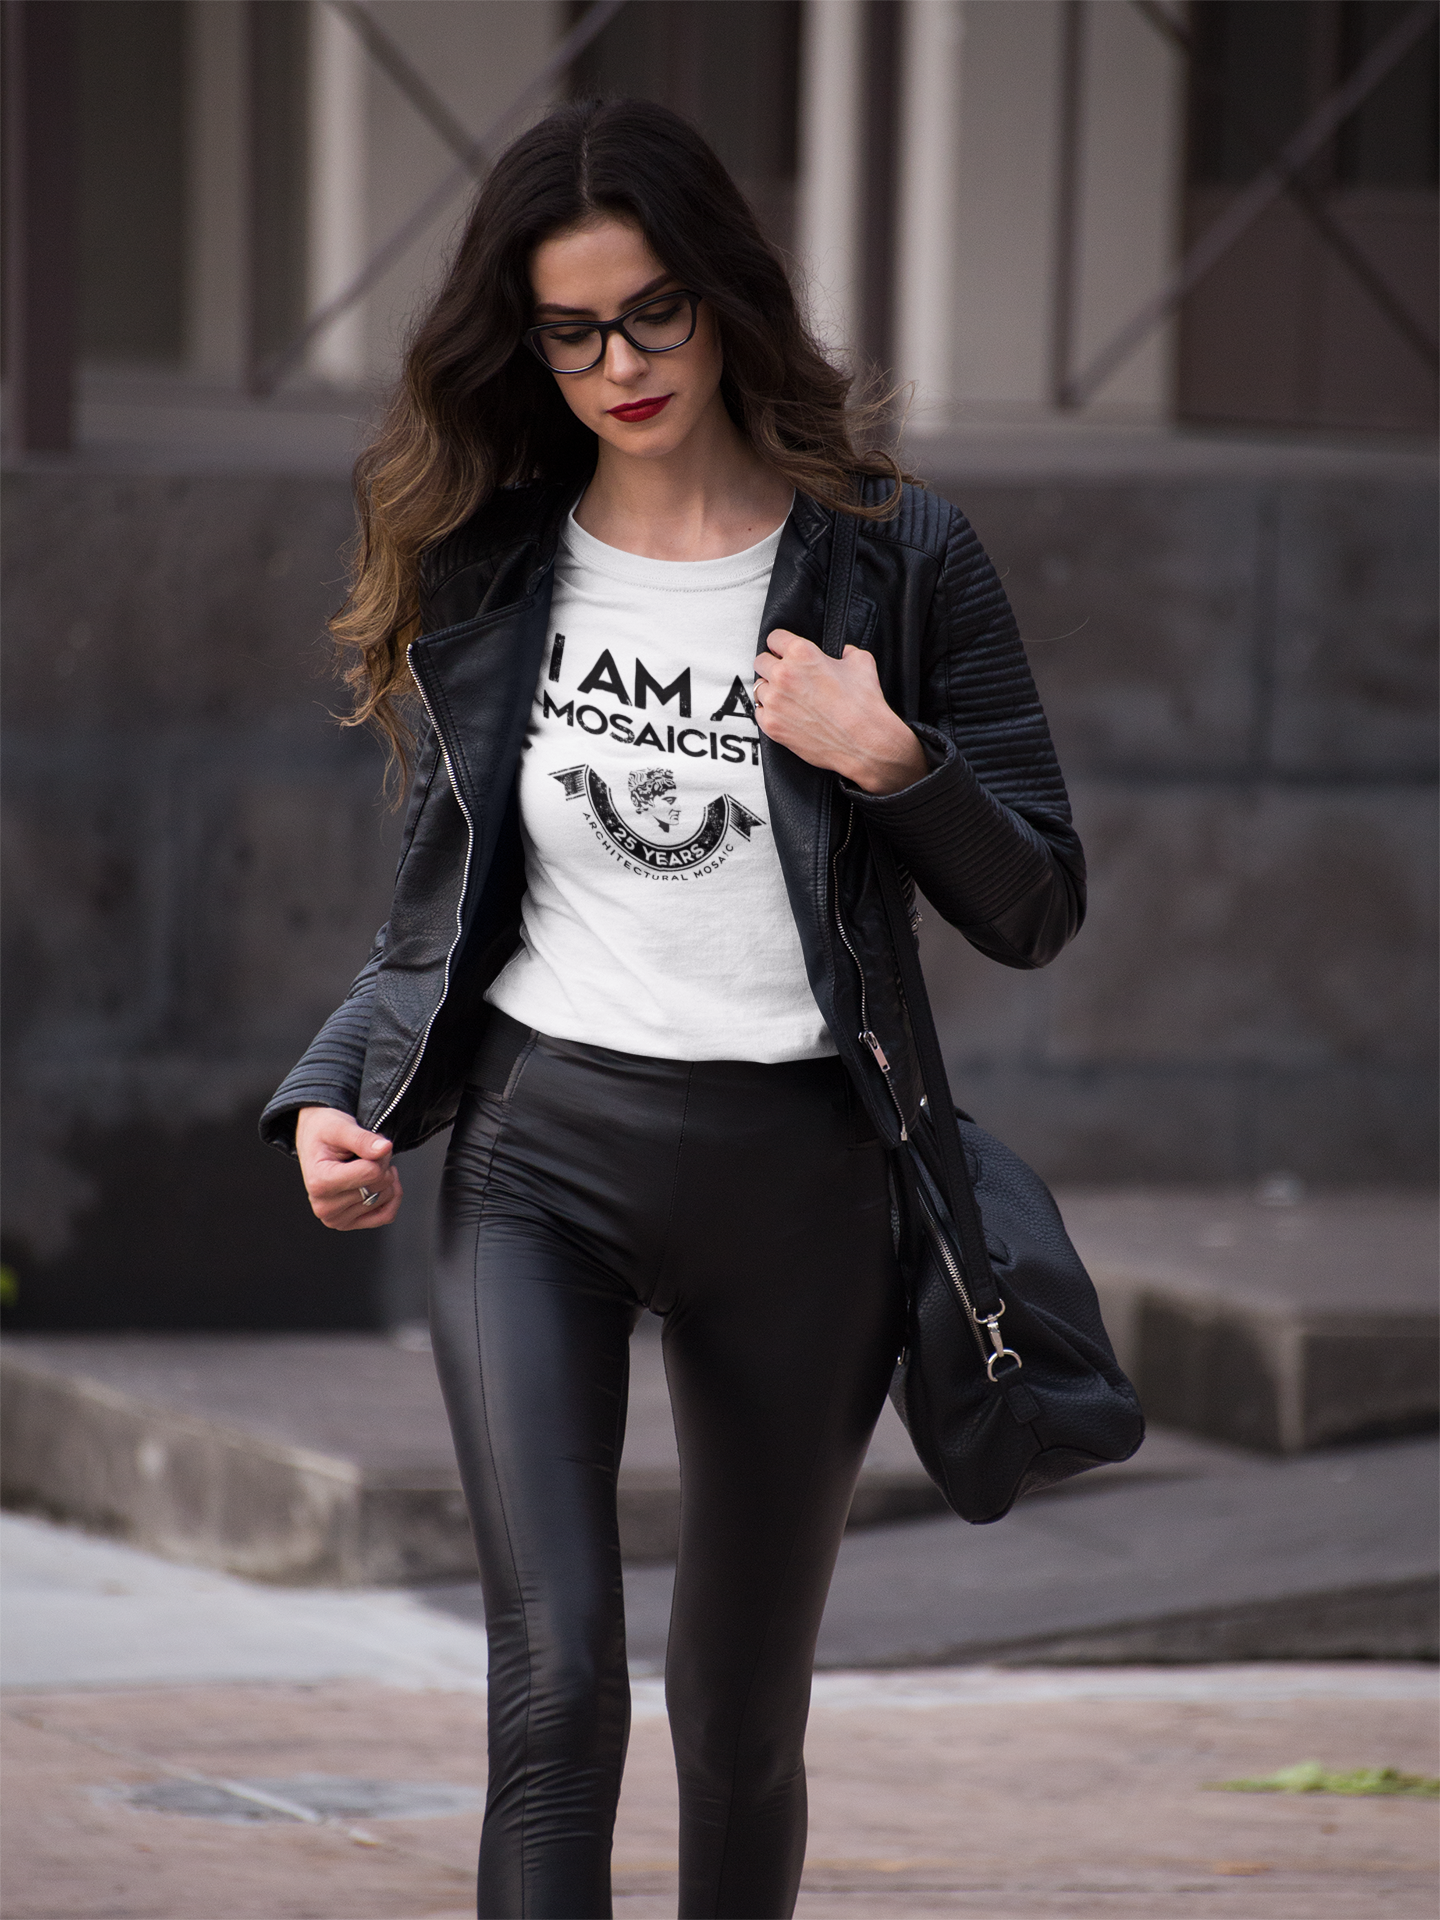 "I AM A MOSAICIST" Women's Crew T-shirt from Mosaicist - White